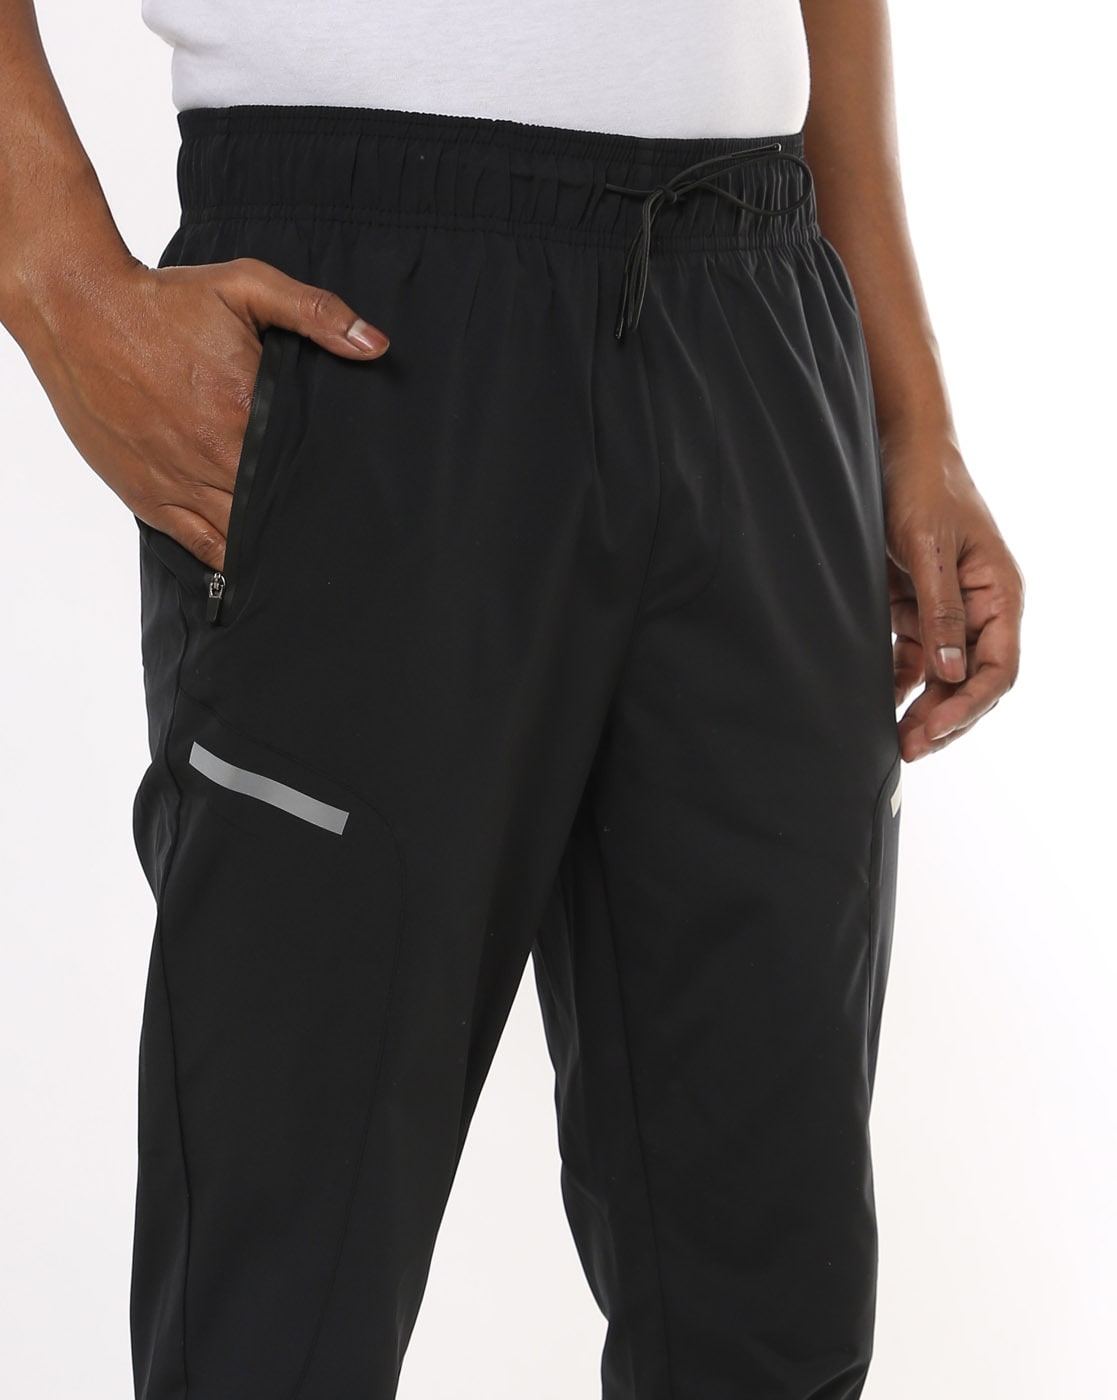 Buy Black Track Pants for Men by ALTHEORY SPORT Online  Ajiocom